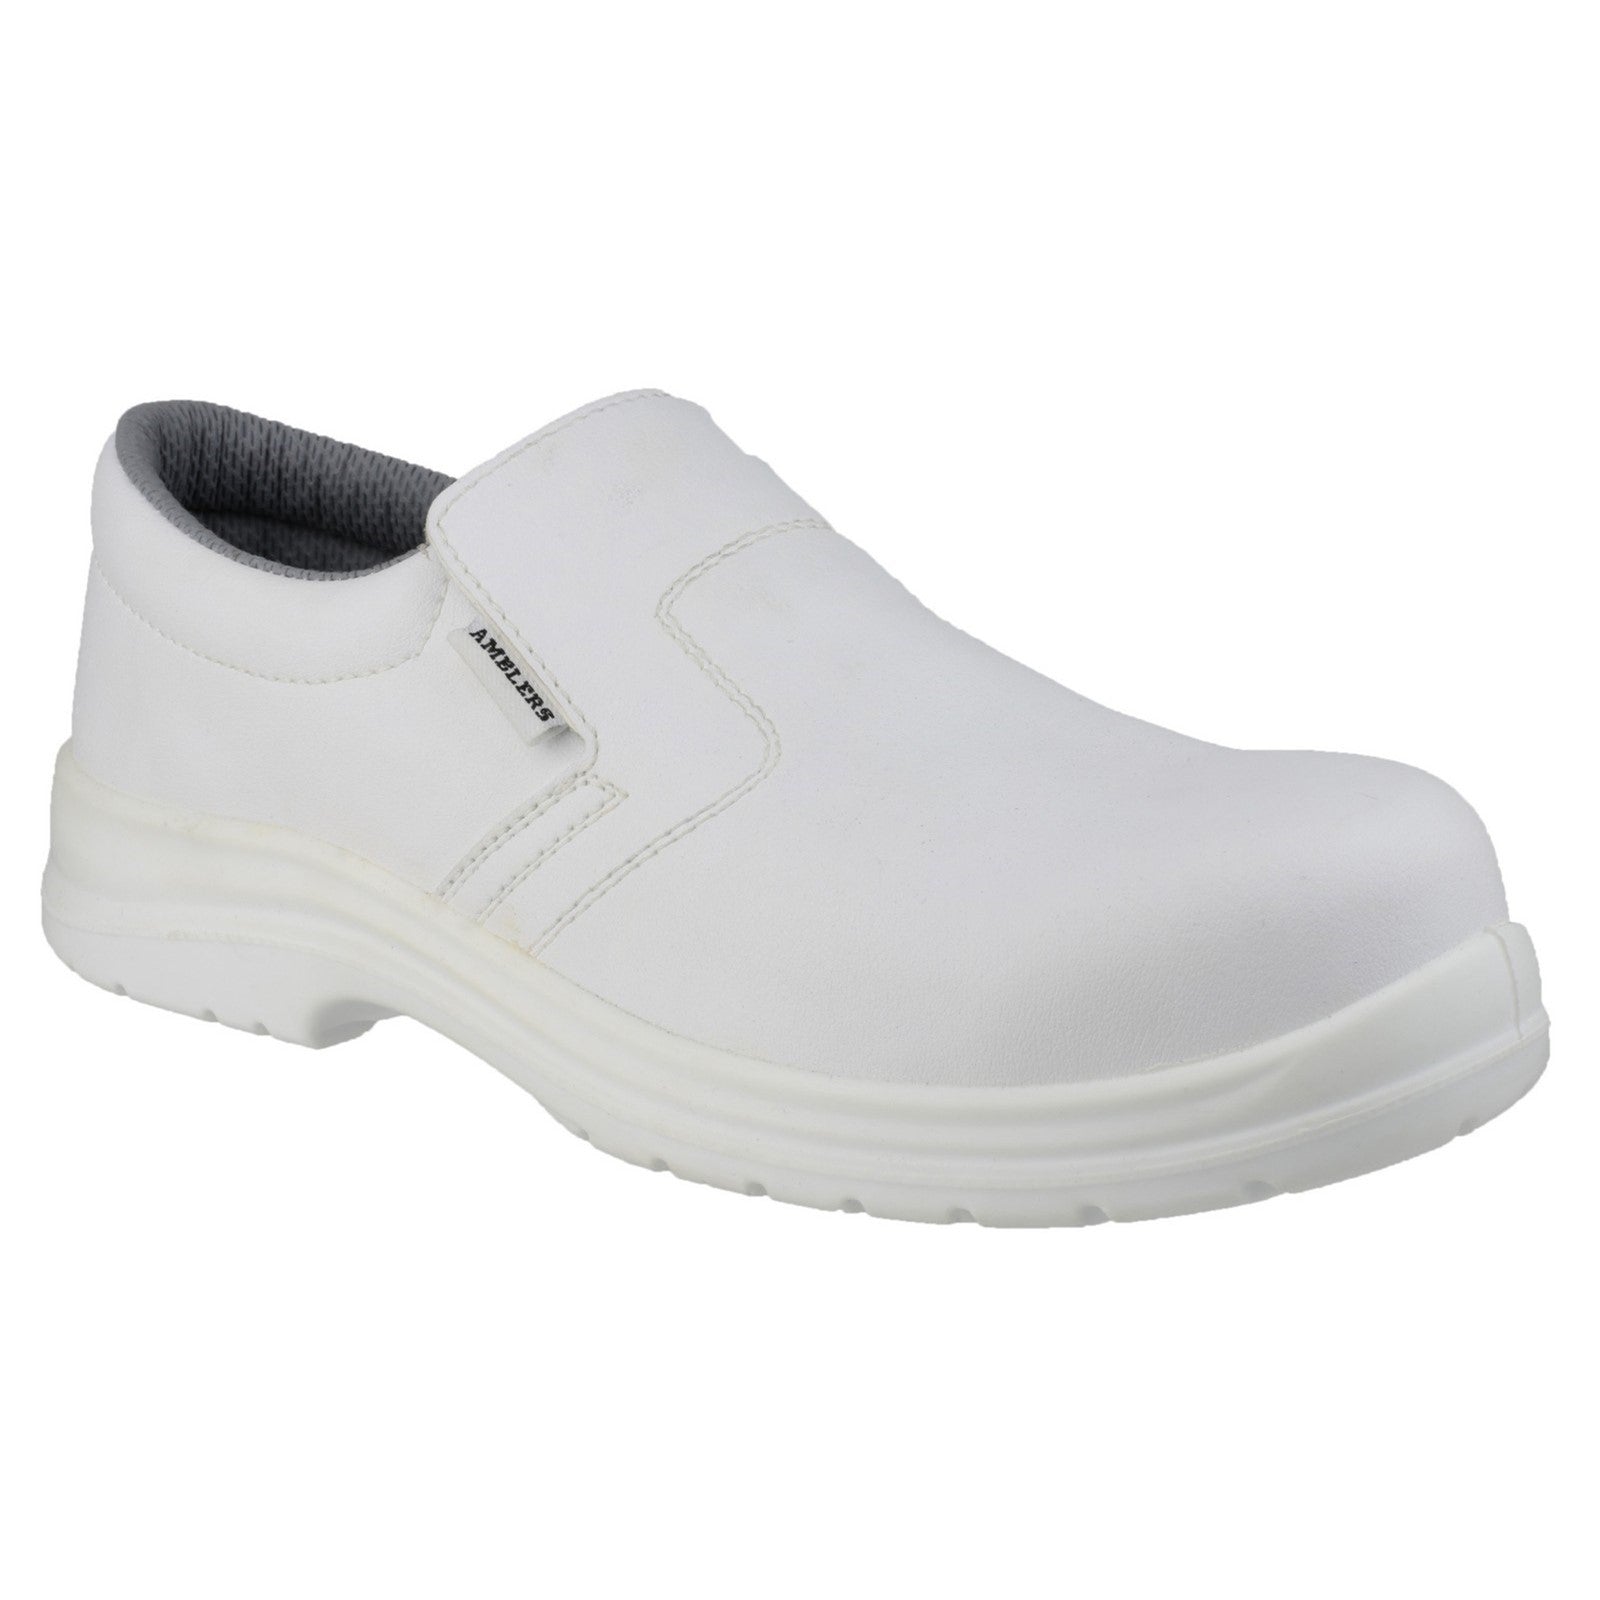 Amblers FS510 Metal-Free Water-Resistant Slip on Safety Shoe